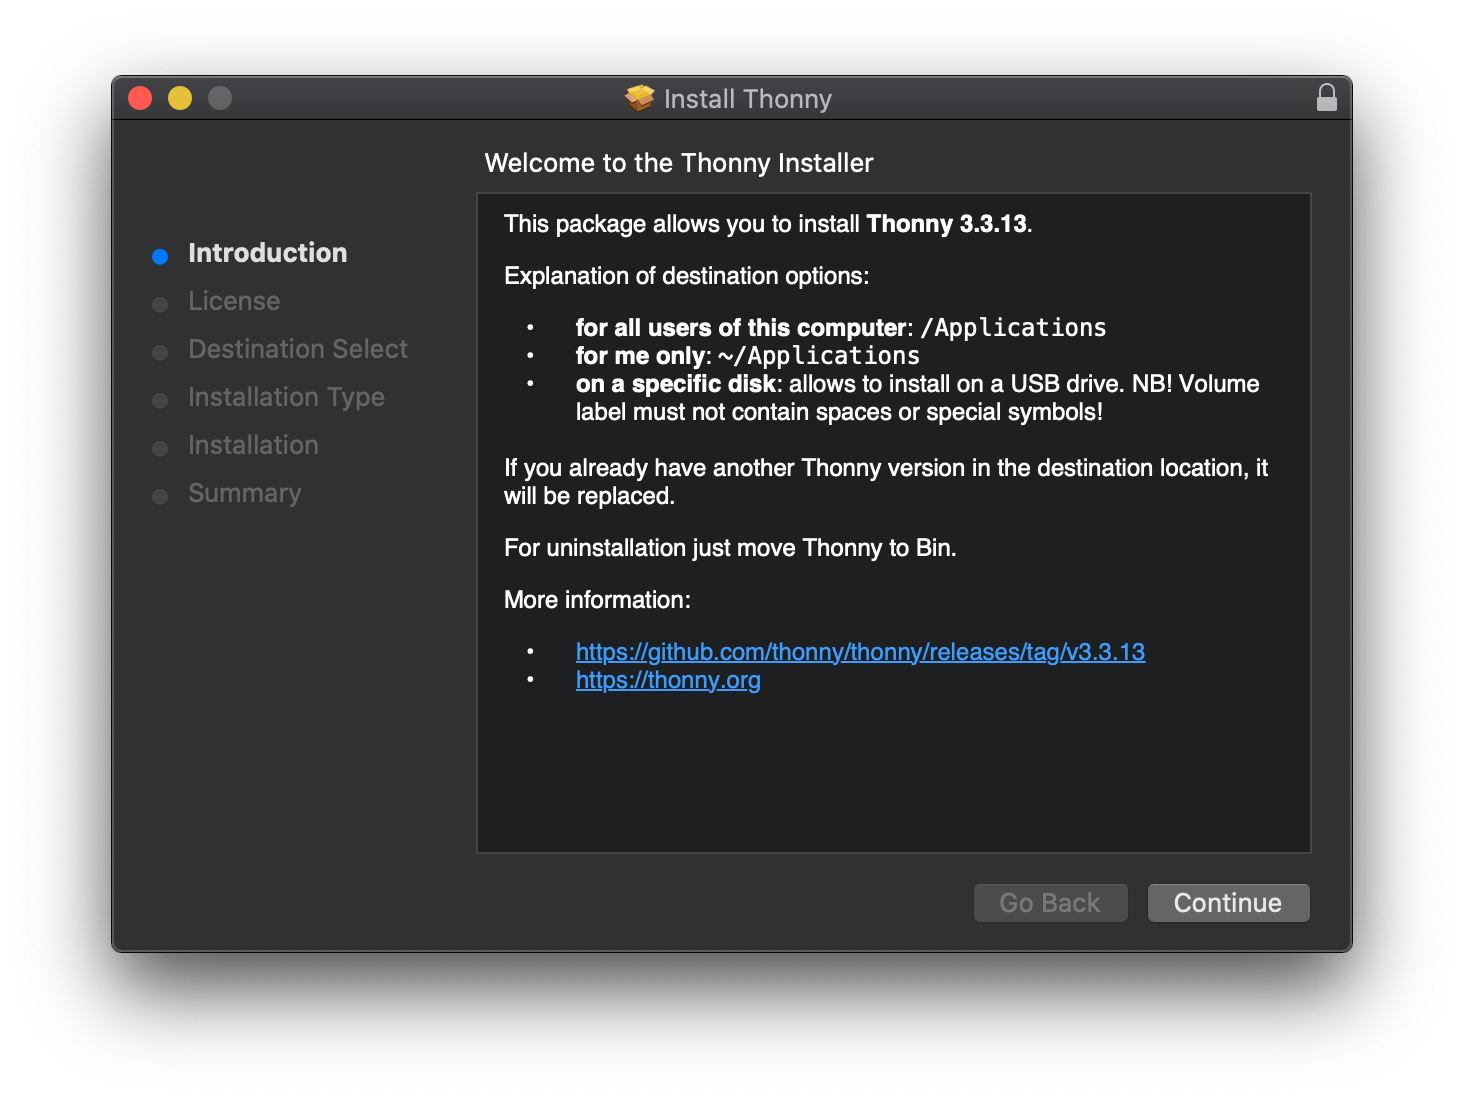 Thonny 3.3.13 installer welcome screen